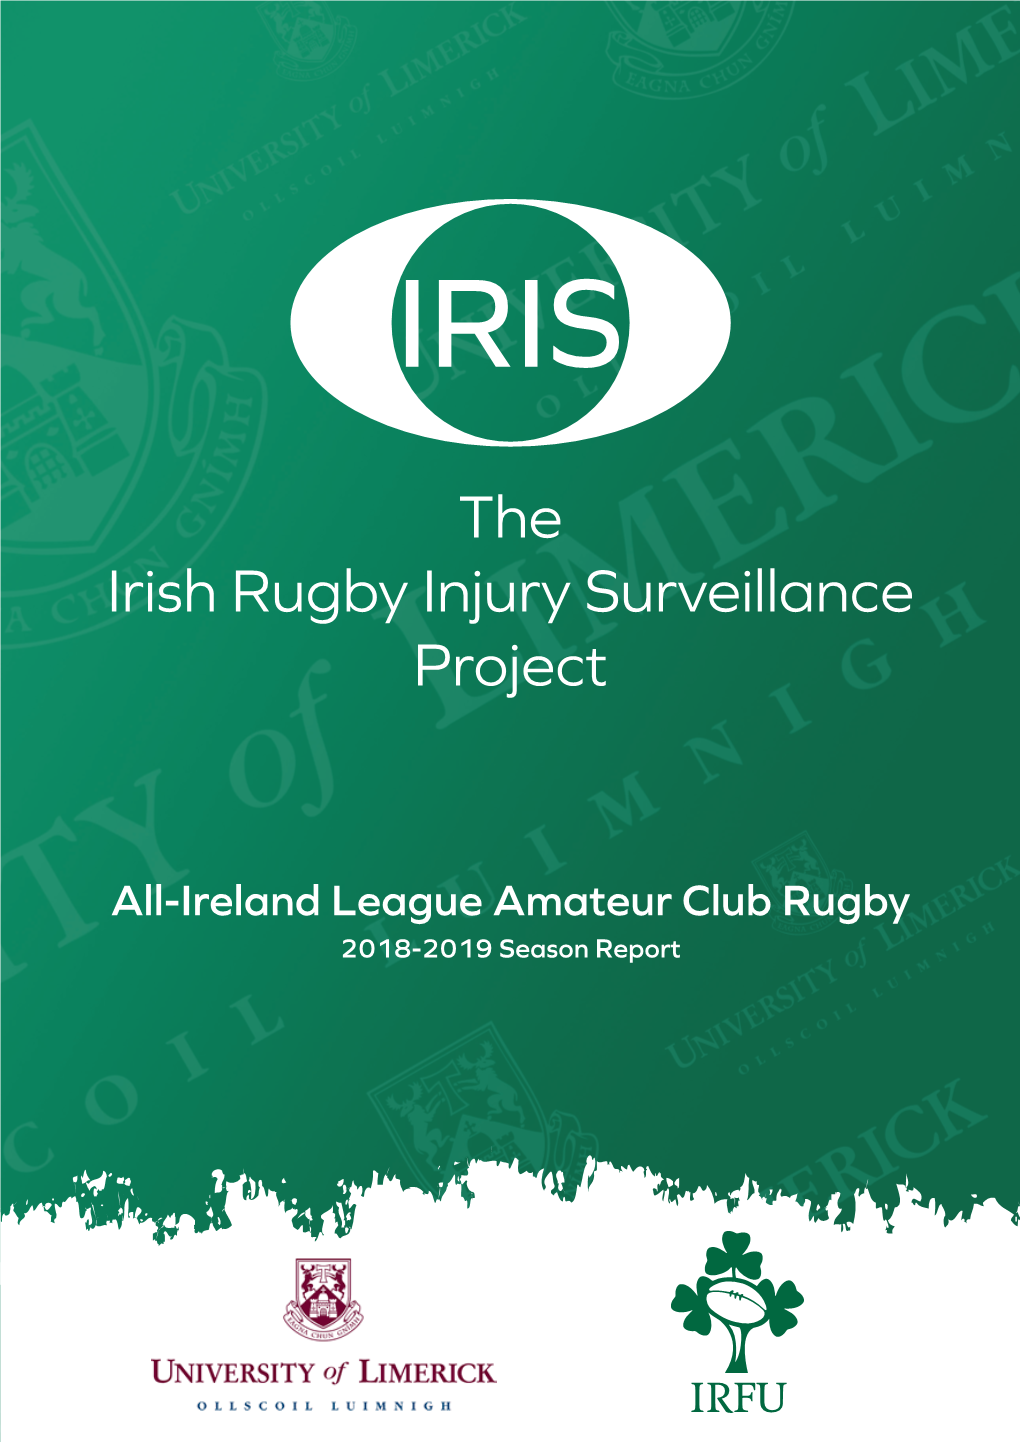 The Irish Rugby Injury Surveillance Project